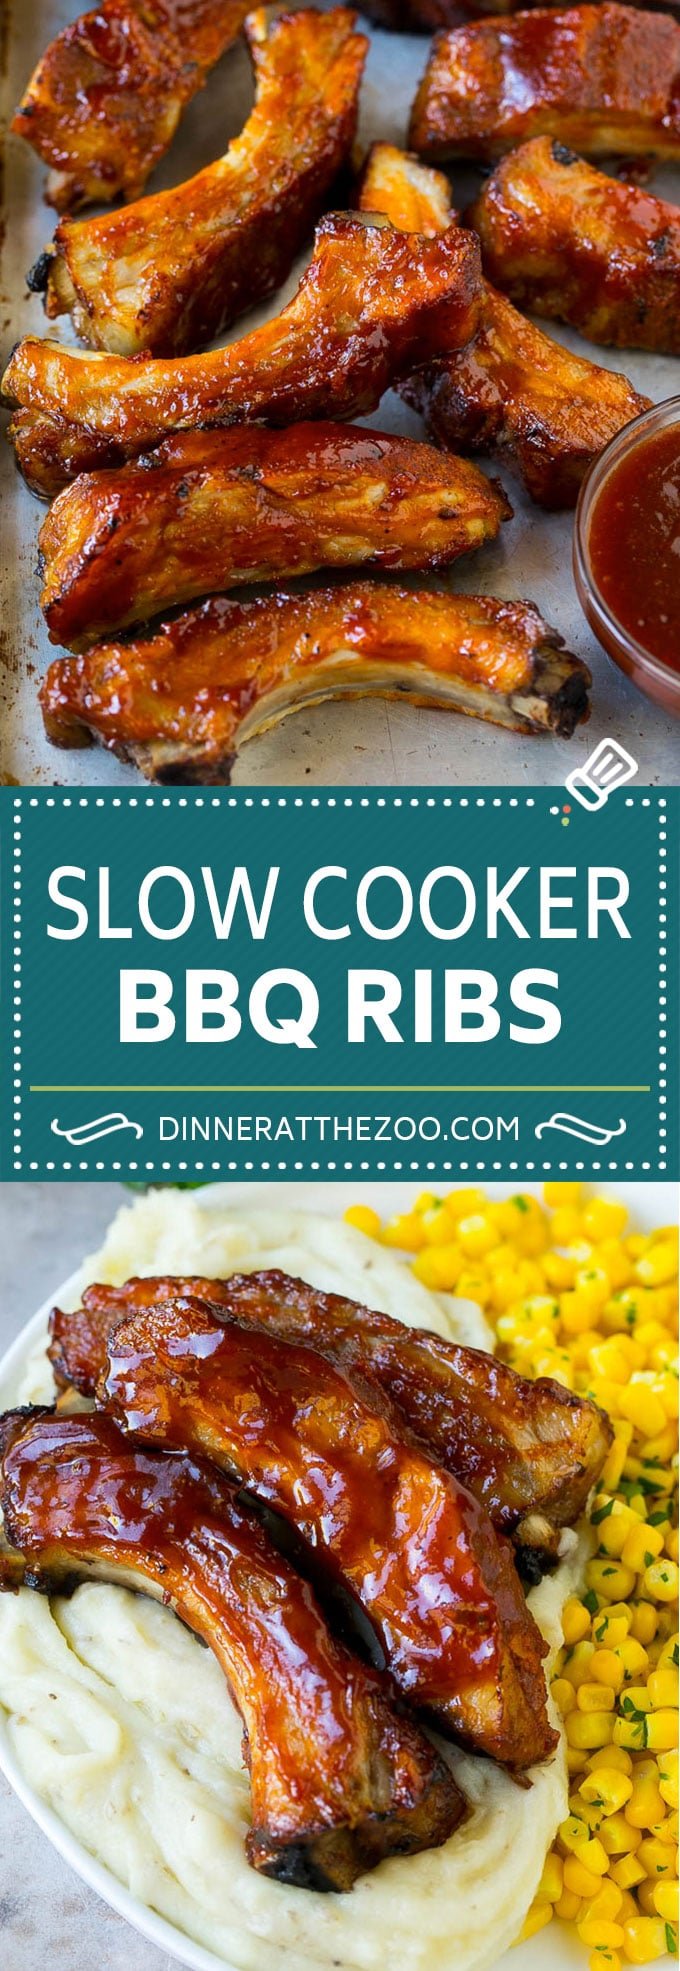 Slow Cooker Ribs | Baby Back Ribs | Crock Pot Ribs | Pork Ribs #ribs #pork #slowcooker #crockpot #bbq #dinner #dinneratthezoo